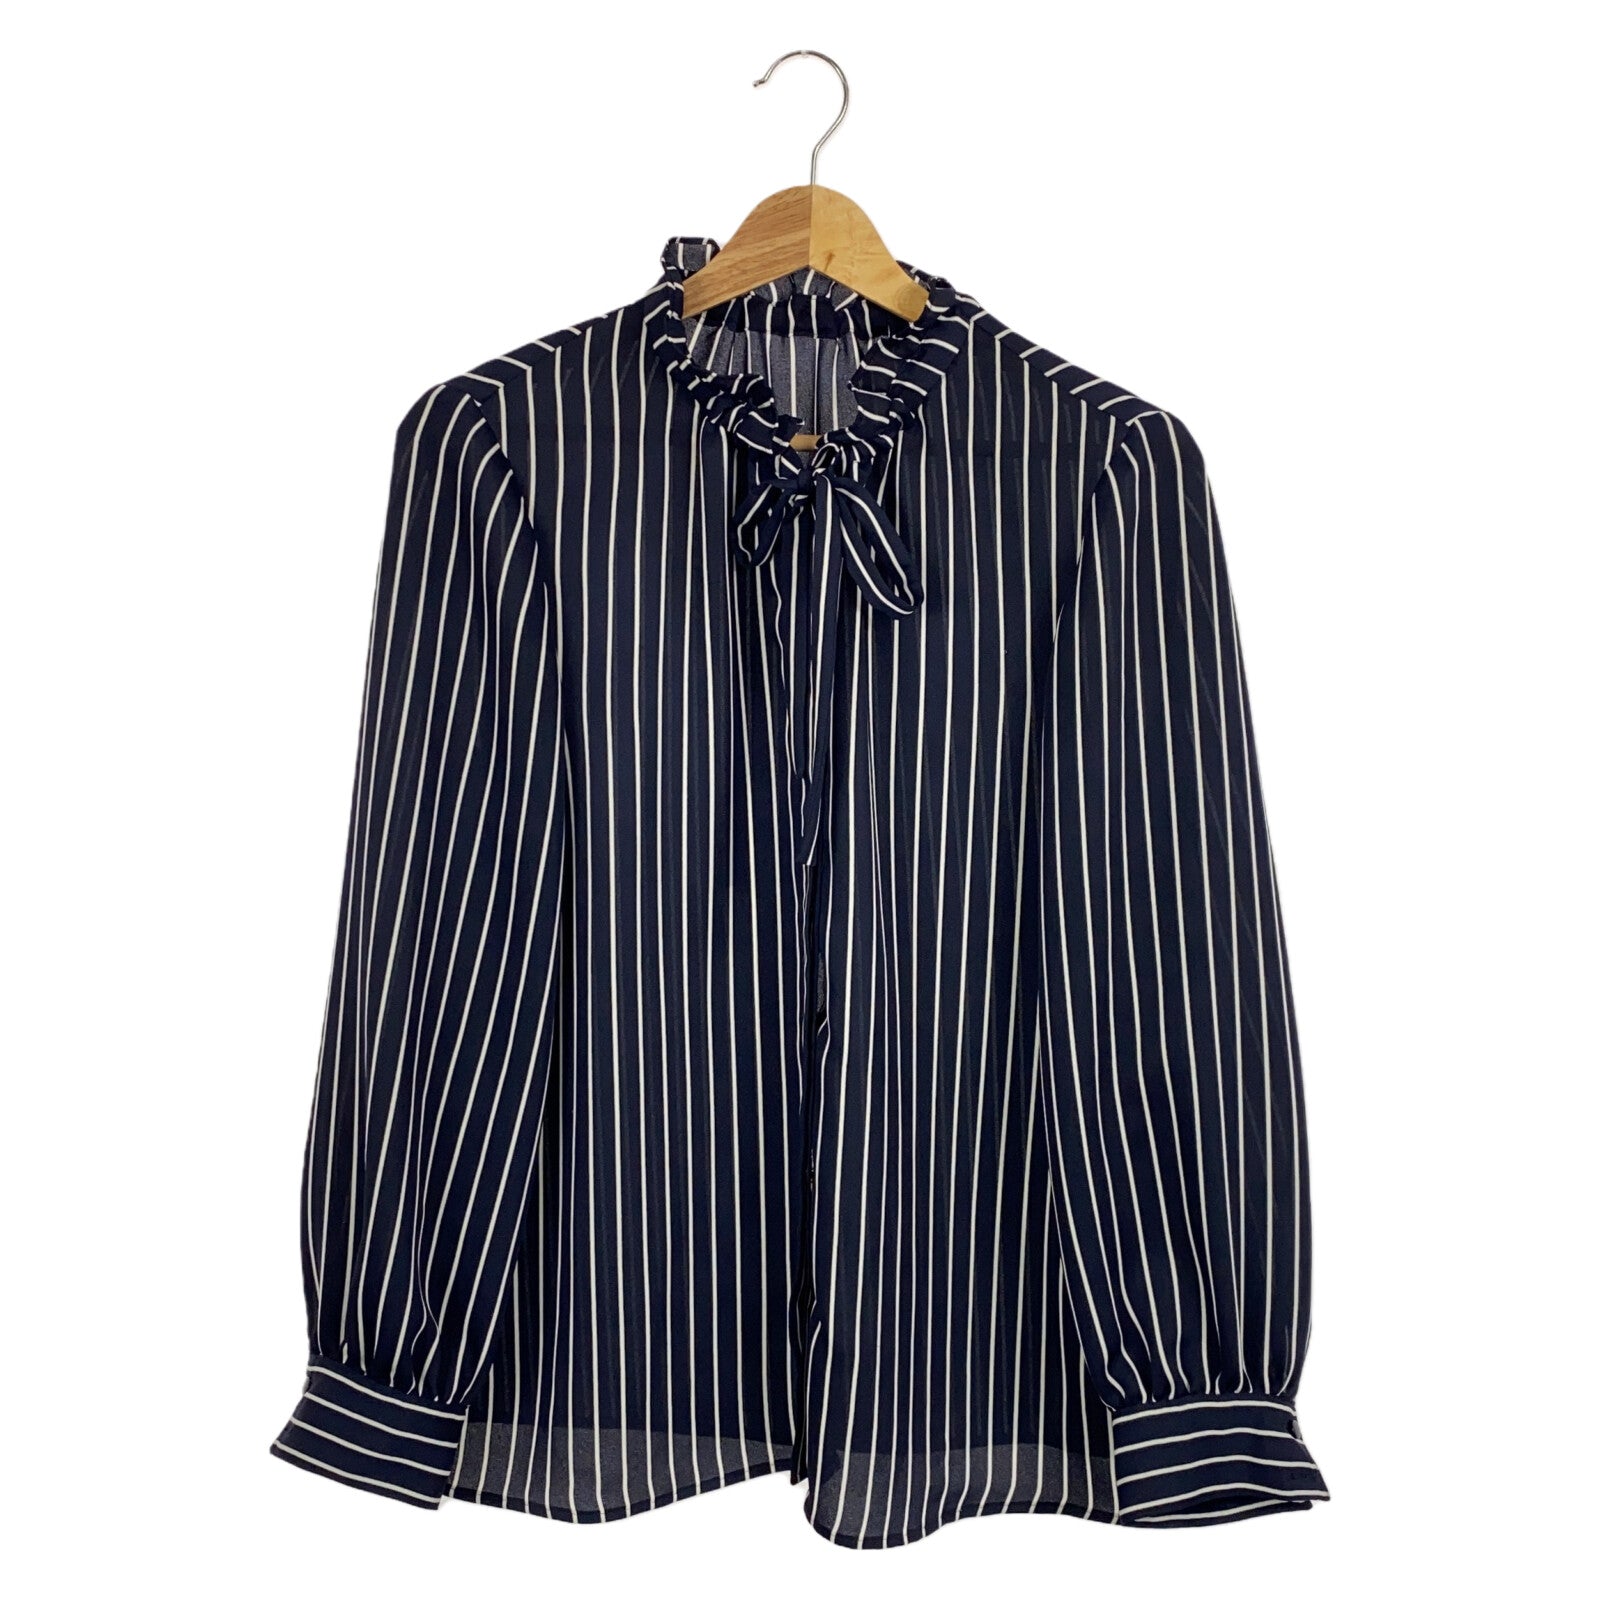 Selection Selection Lerian Blues Clothes Tops Polyester  Navyes